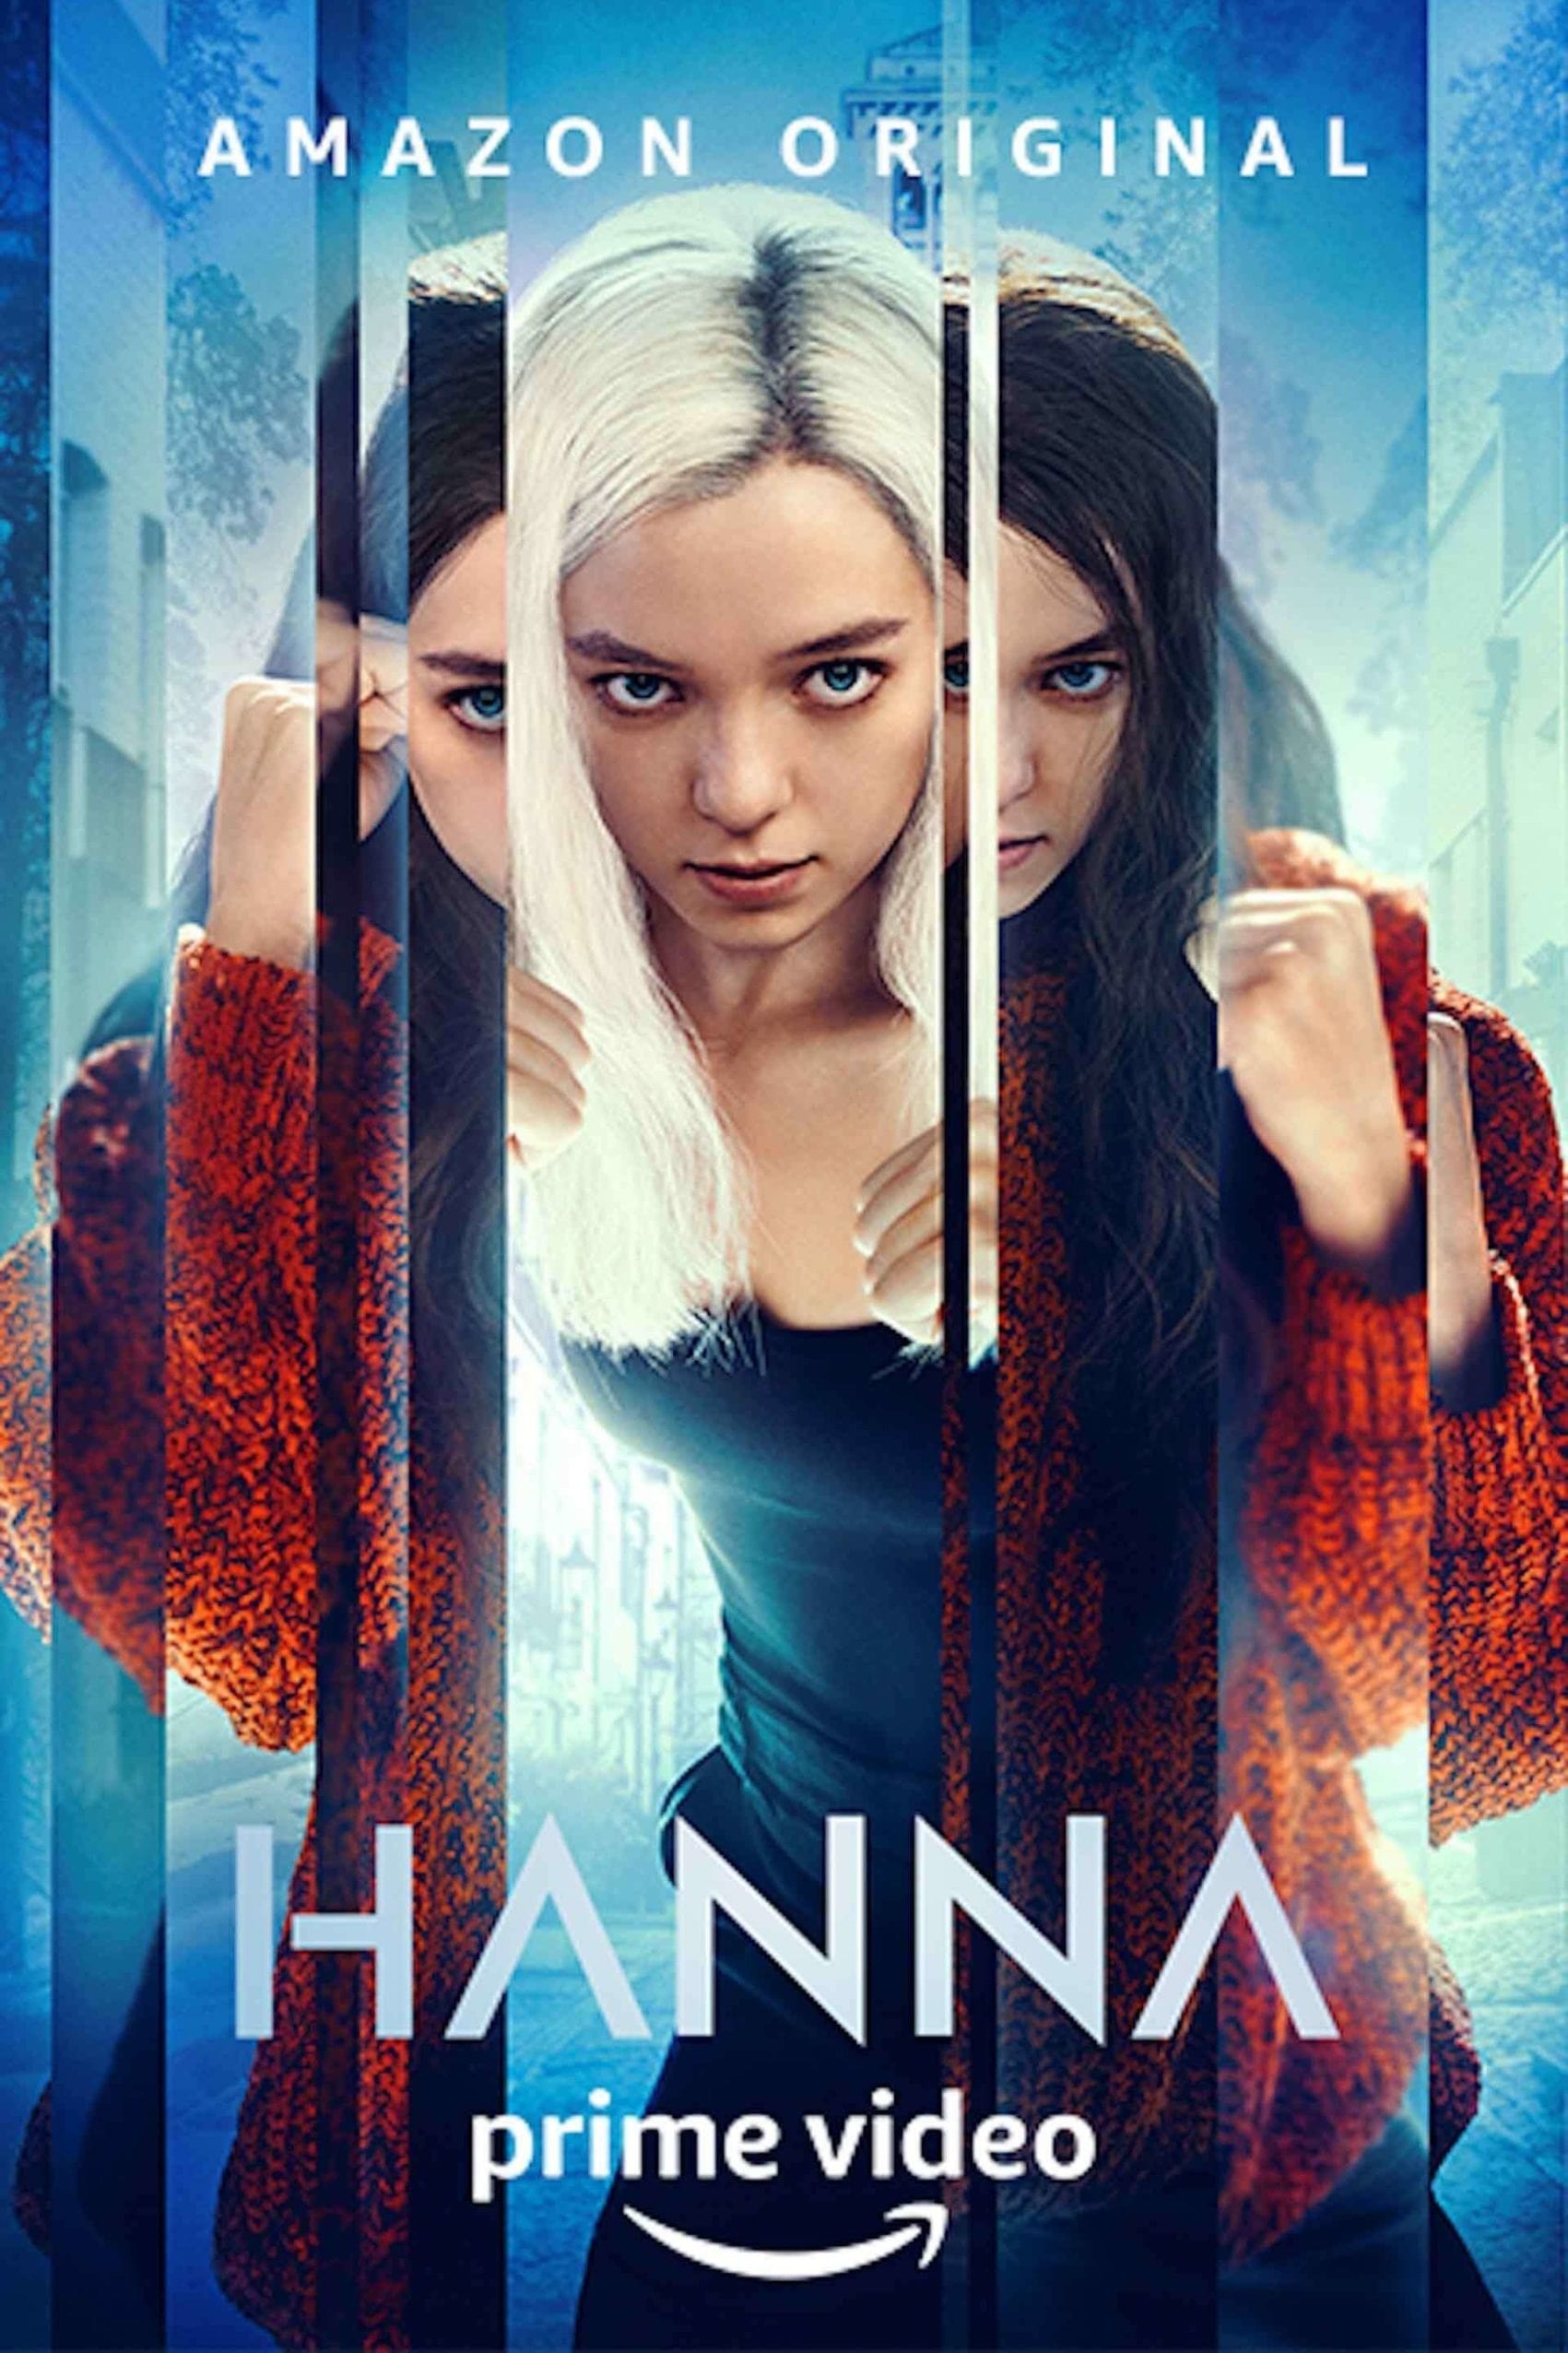 hanna-tv-series-2019-posters-the-movie-database-tmdb